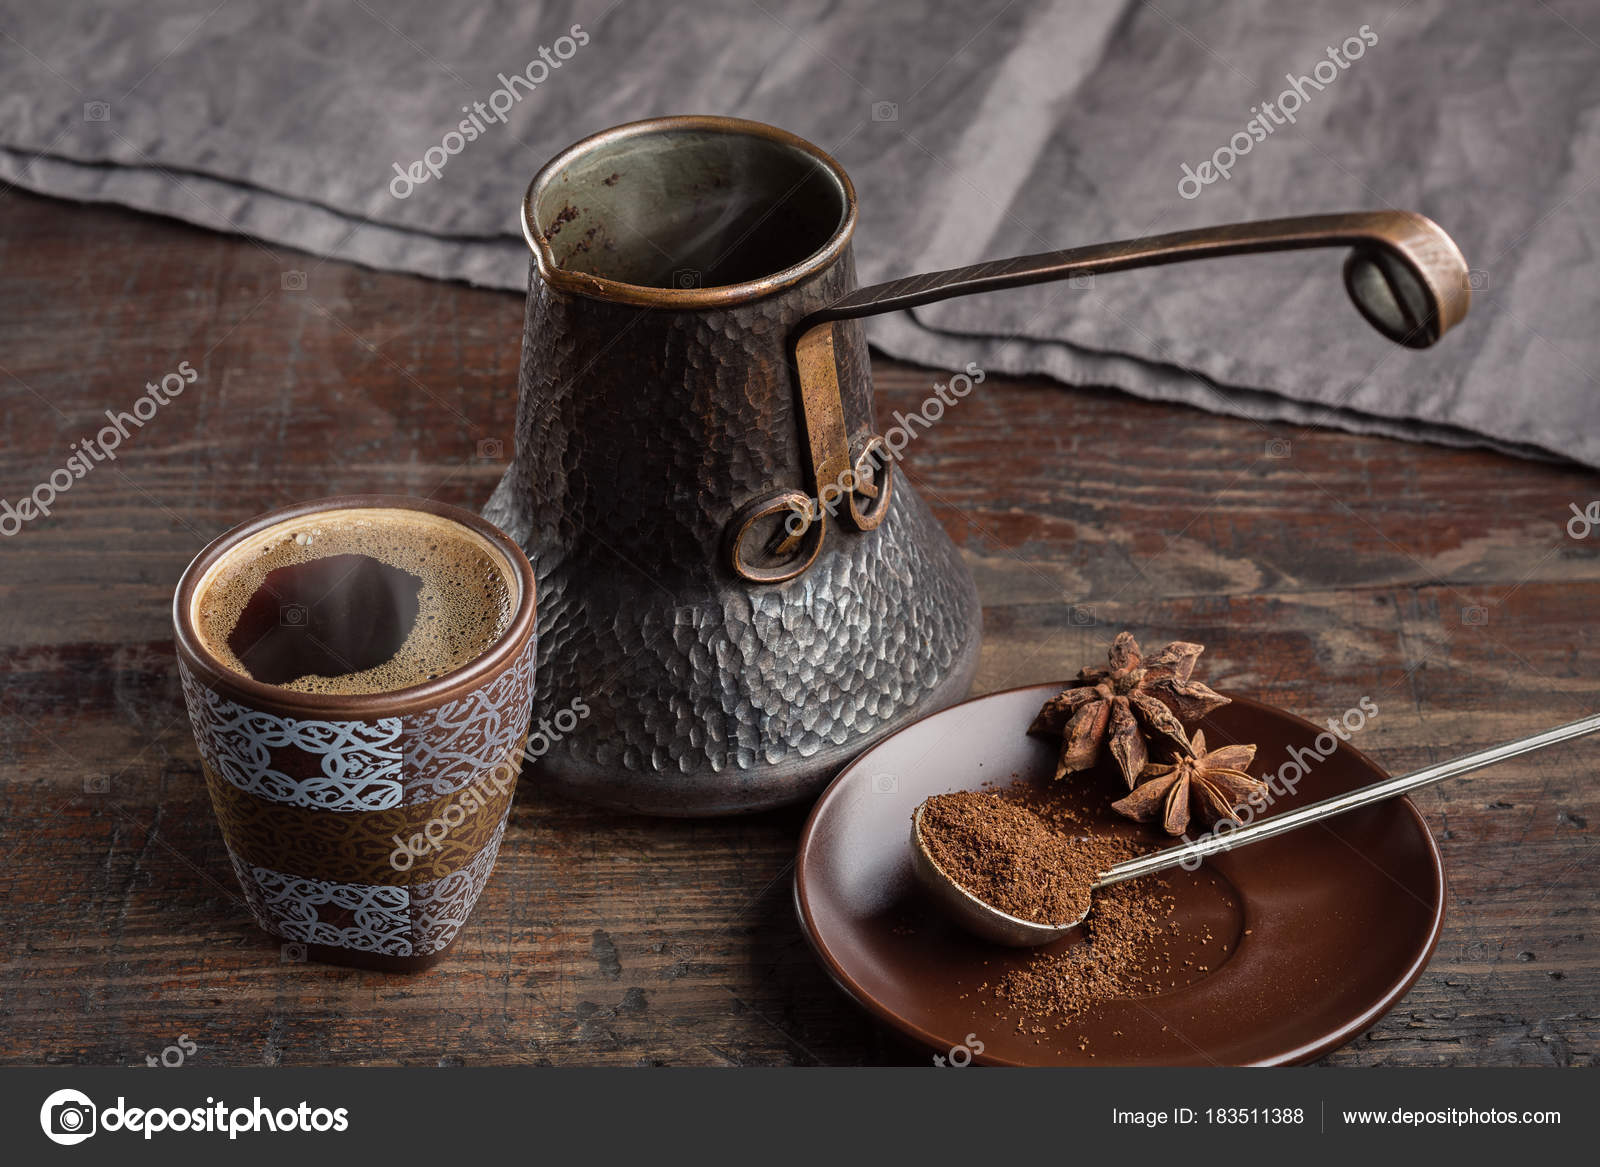 https://st3.depositphotos.com/4738543/18351/i/1600/depositphotos_183511388-stock-photo-hot-coffee-traditional-turkish-cup.jpg